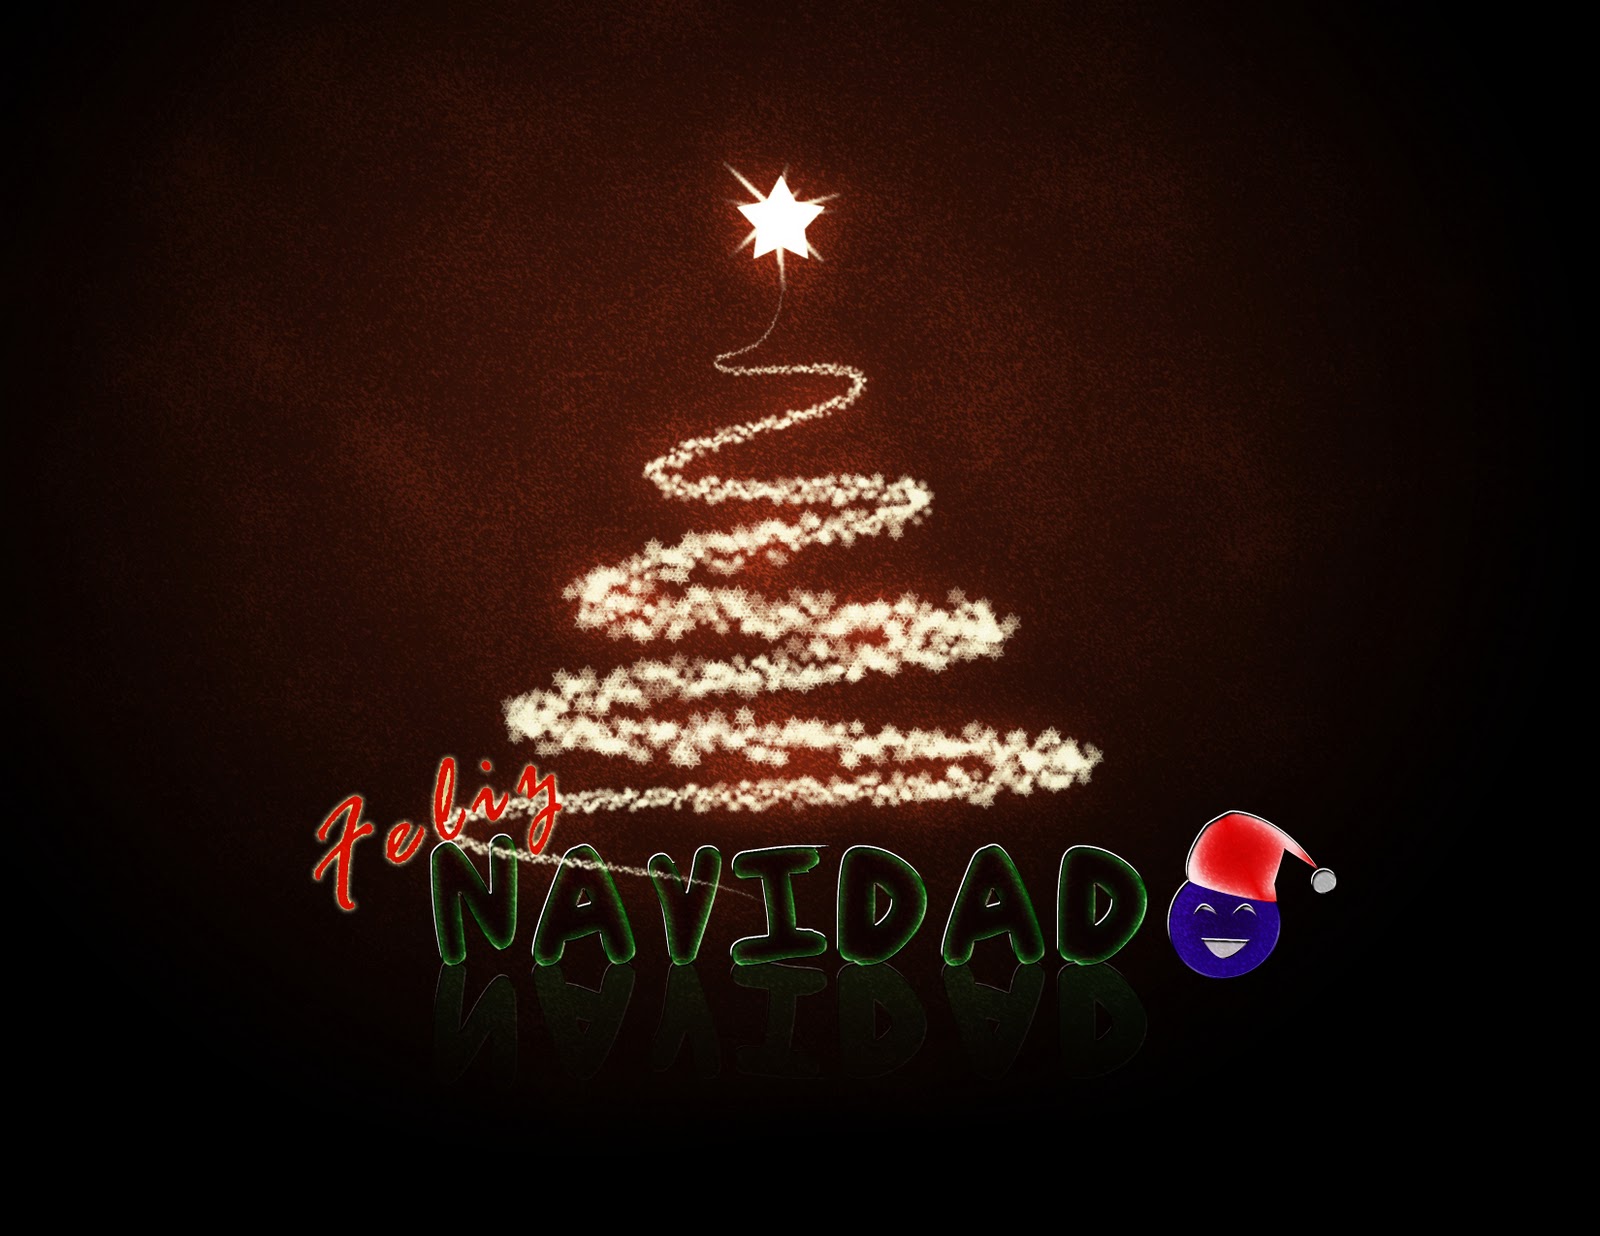 http://1.bp.blogspot.com/_jNf7H9UpjGc/TP7ZGyB3rmI/AAAAAAAAAD4/wbJuCUAKUjs/s1600/Wallpaper___Navidad_by_ArkadyNekozukii.jpg